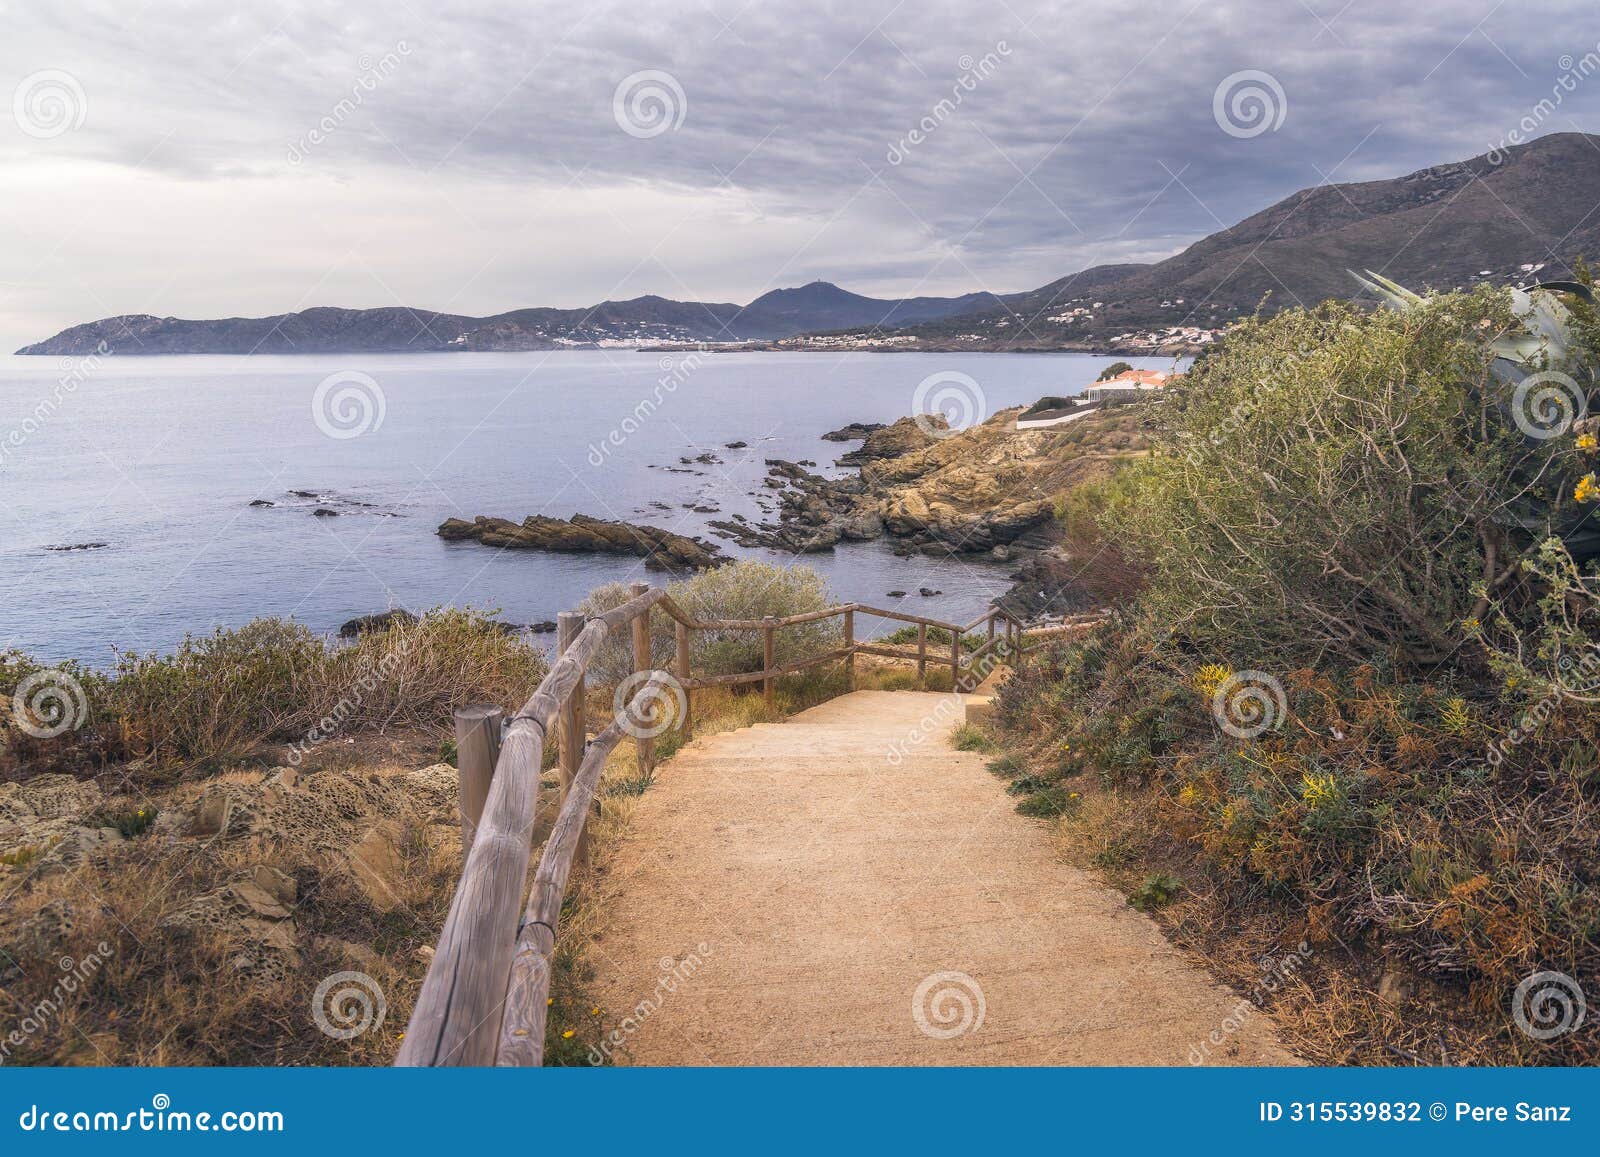 coastal path from llanÃÂ§a to port de la selva, catalonia